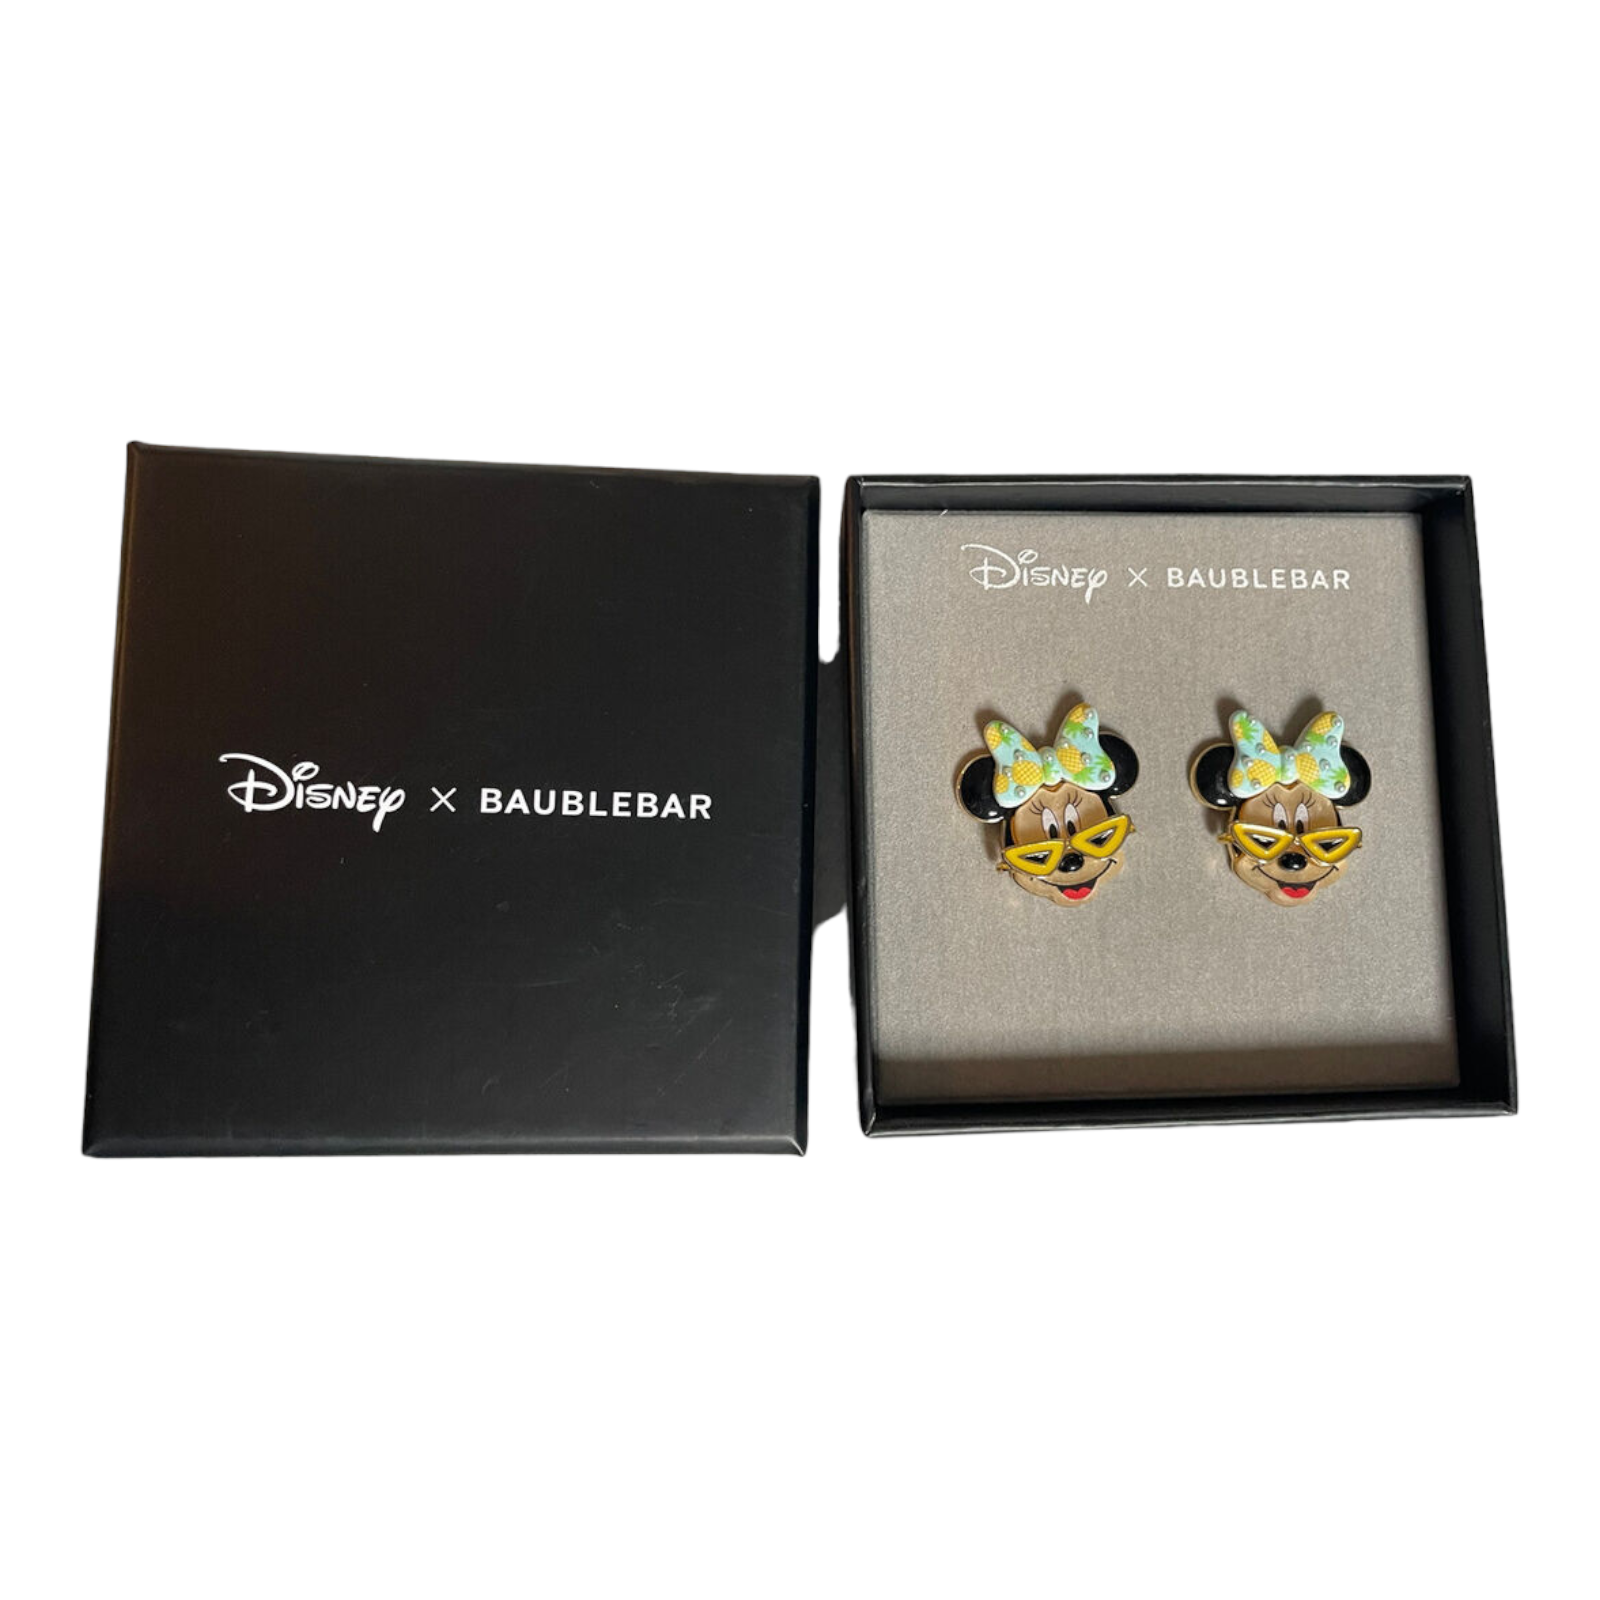 Baublebar x Disney Minnie Mouse Wearing Sunglasses Earrings